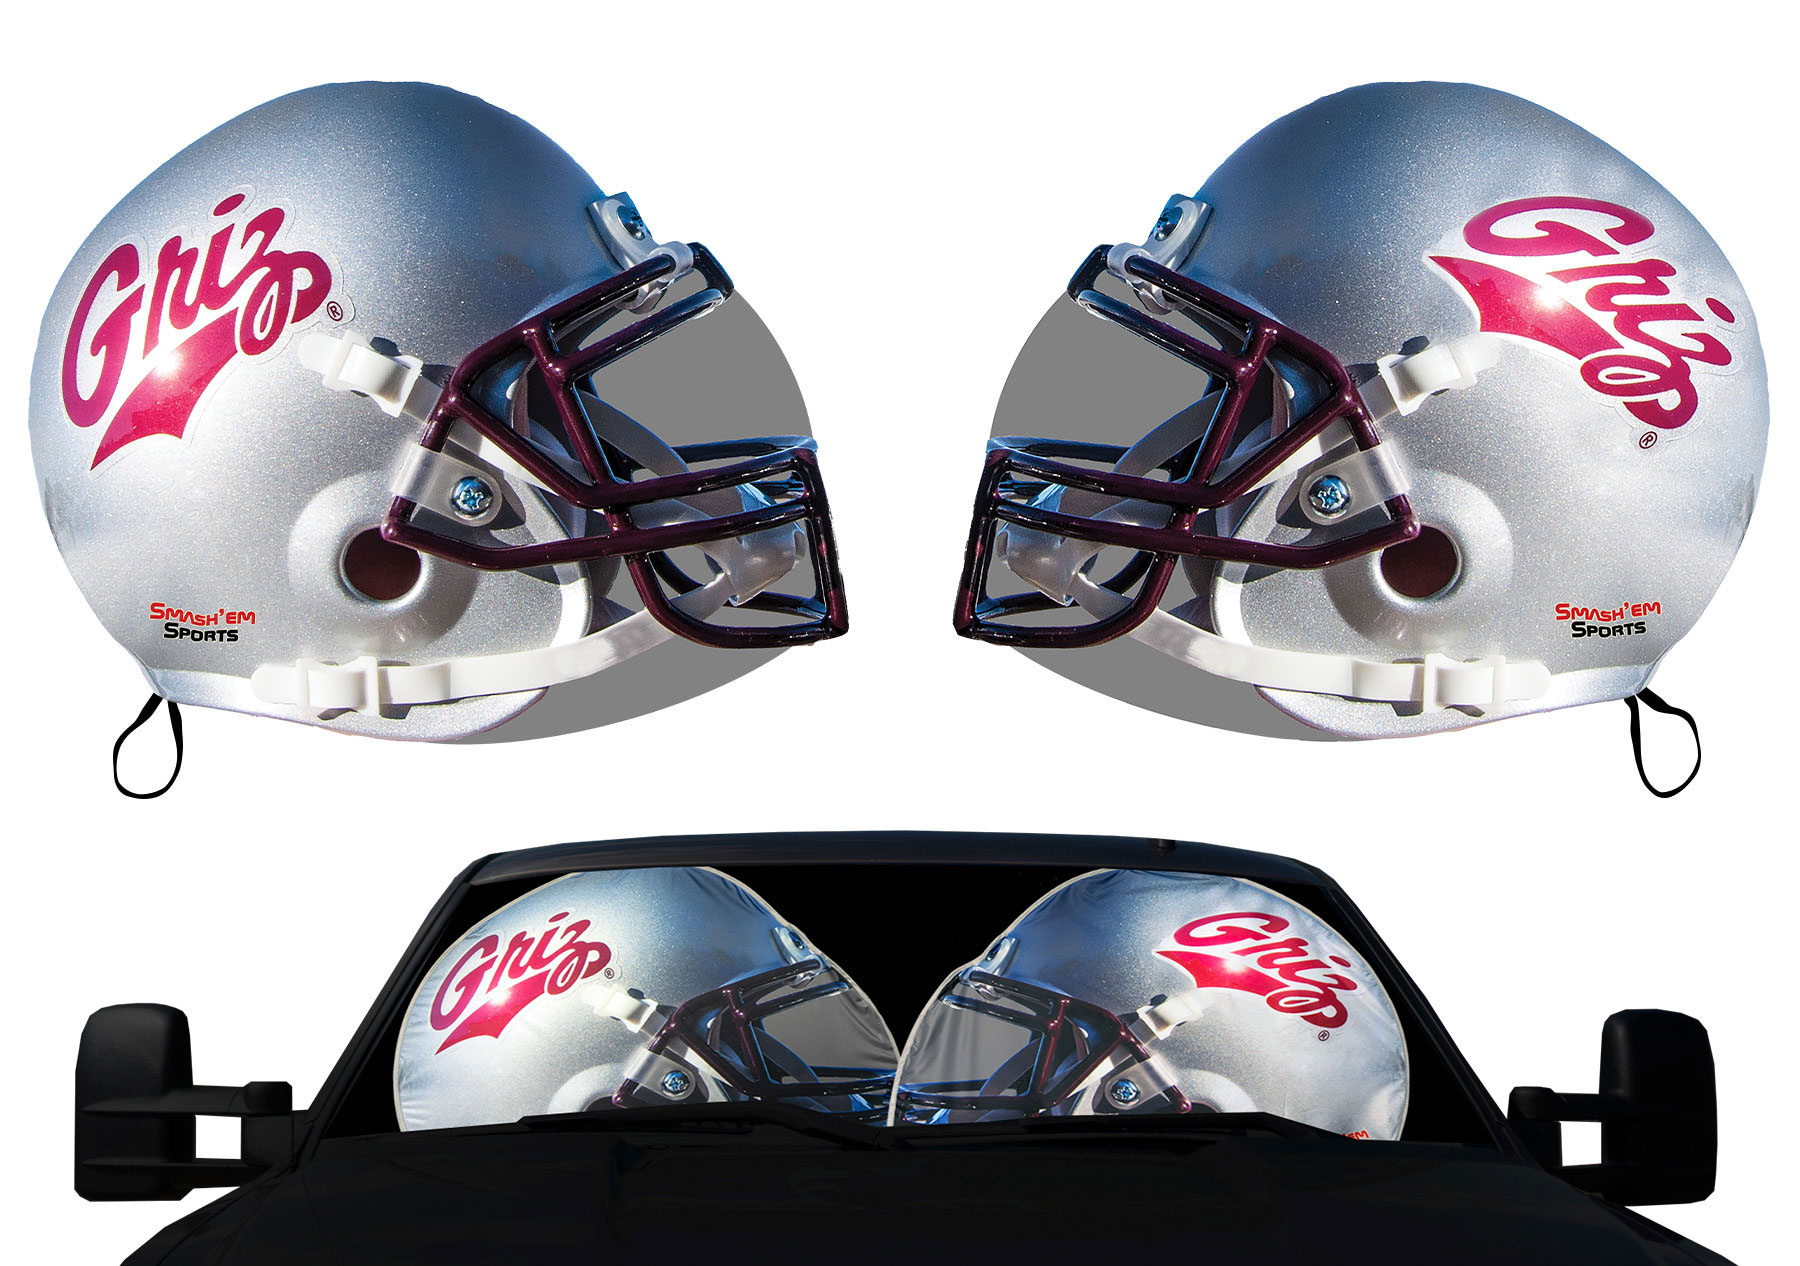 U of Montana Grizzlies  College football helmets, Football helmets, Football  uniforms